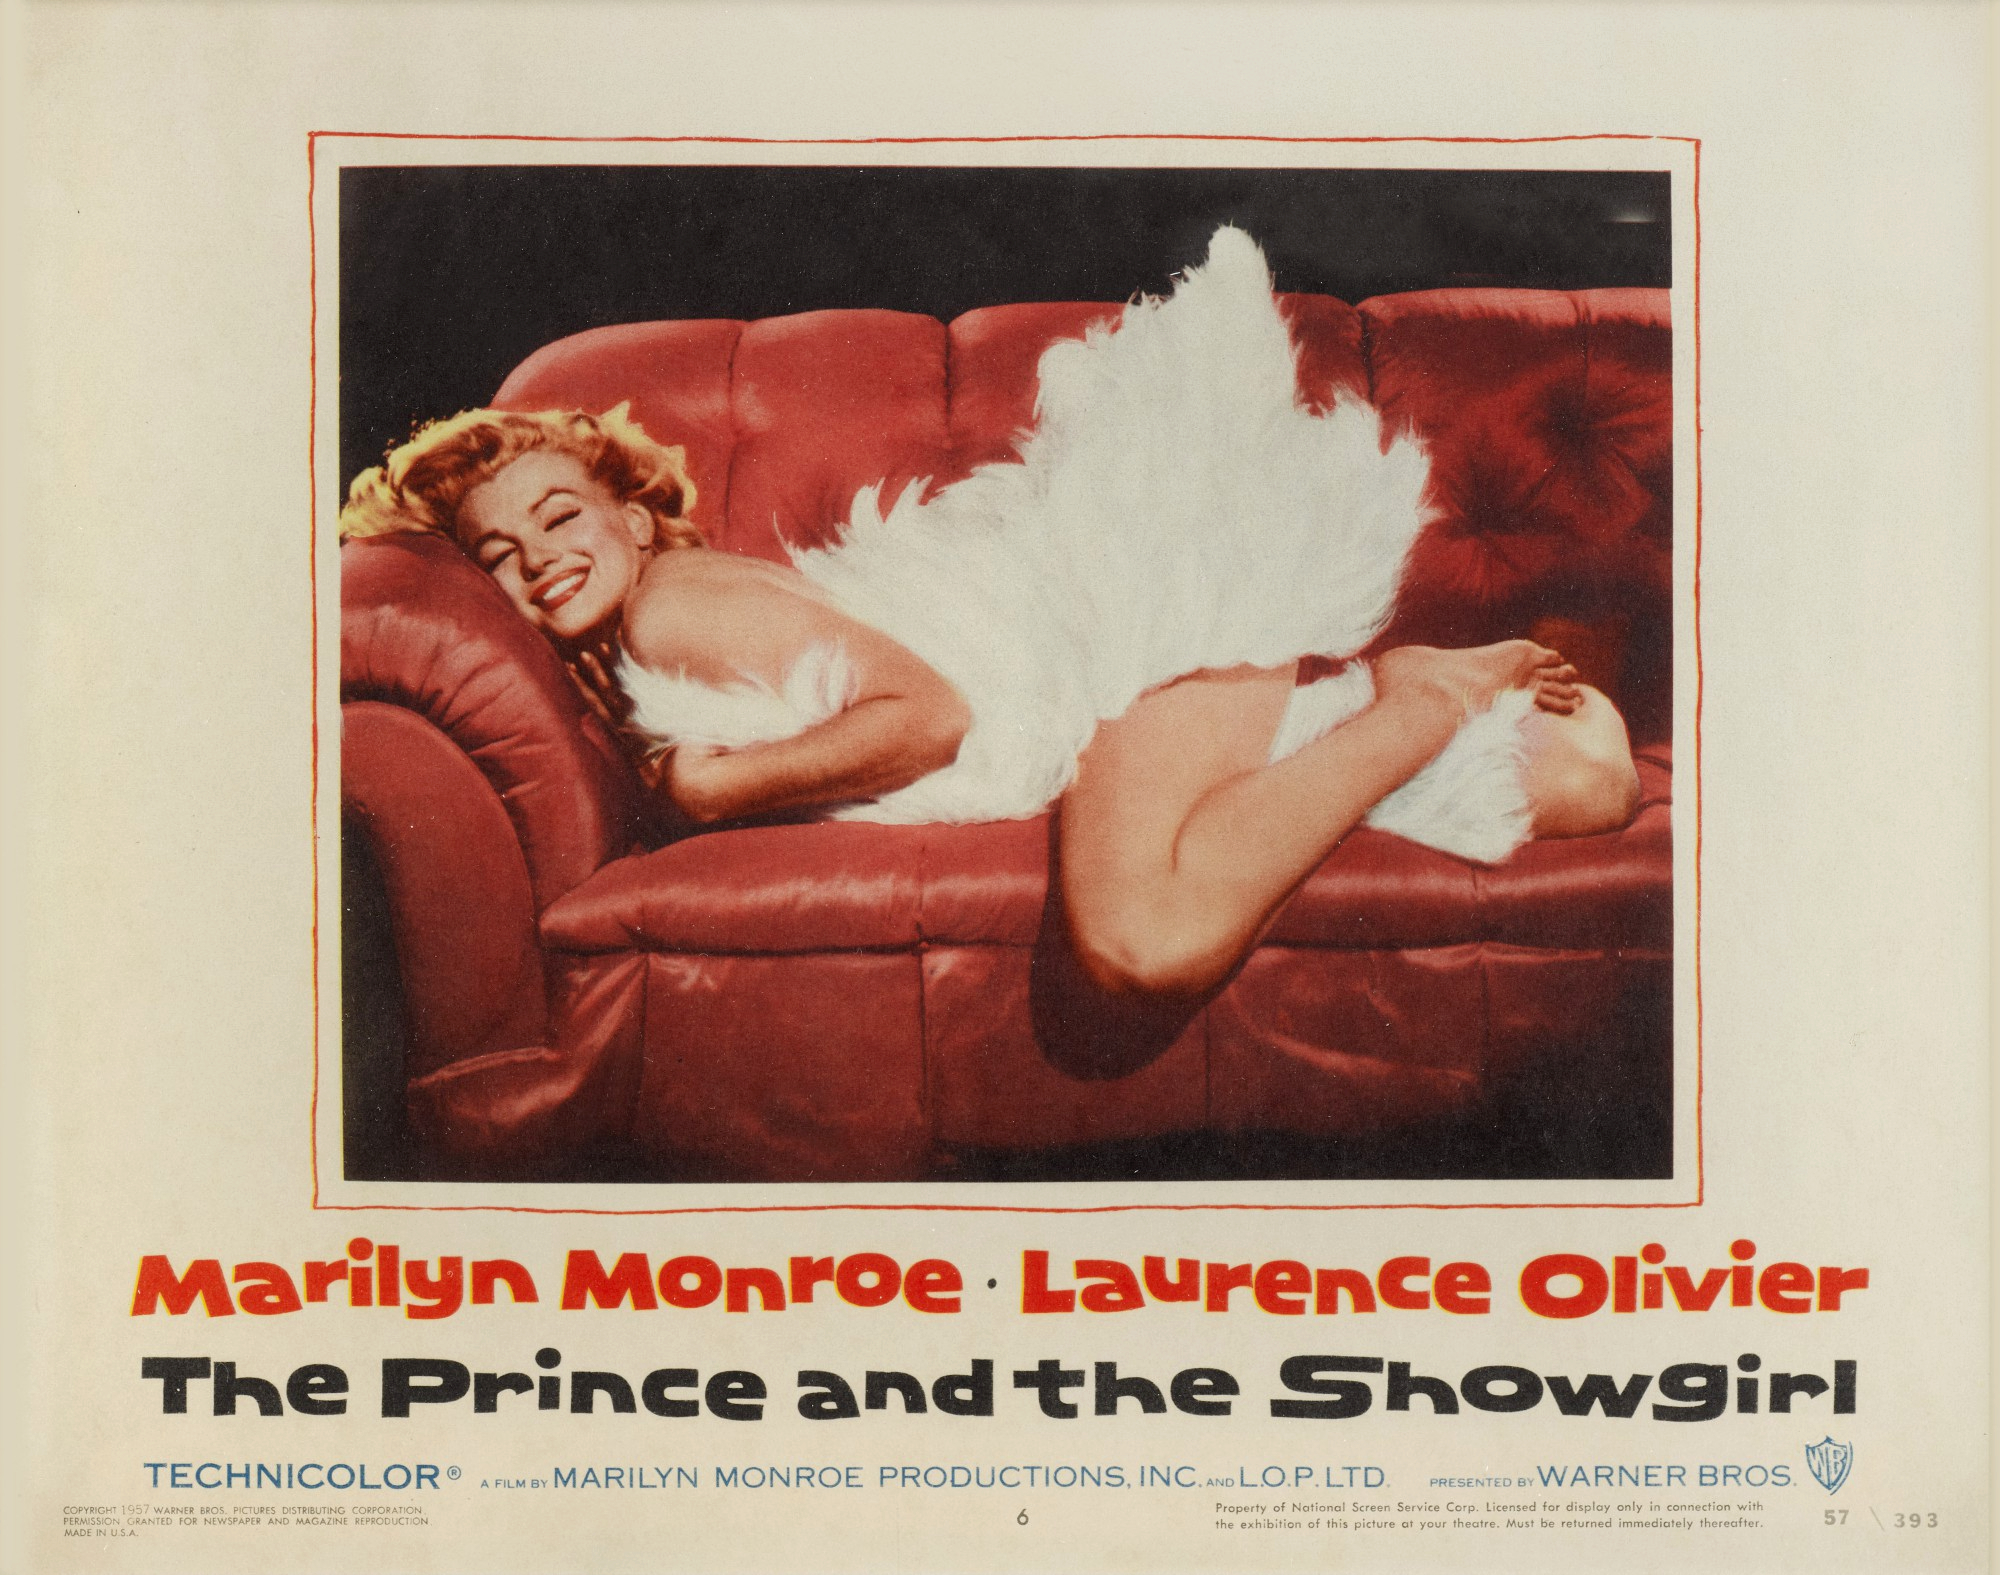 Vintage The Prince and the Showgirl lobby card (Warner Bros, 1957). Richard Avedon image.